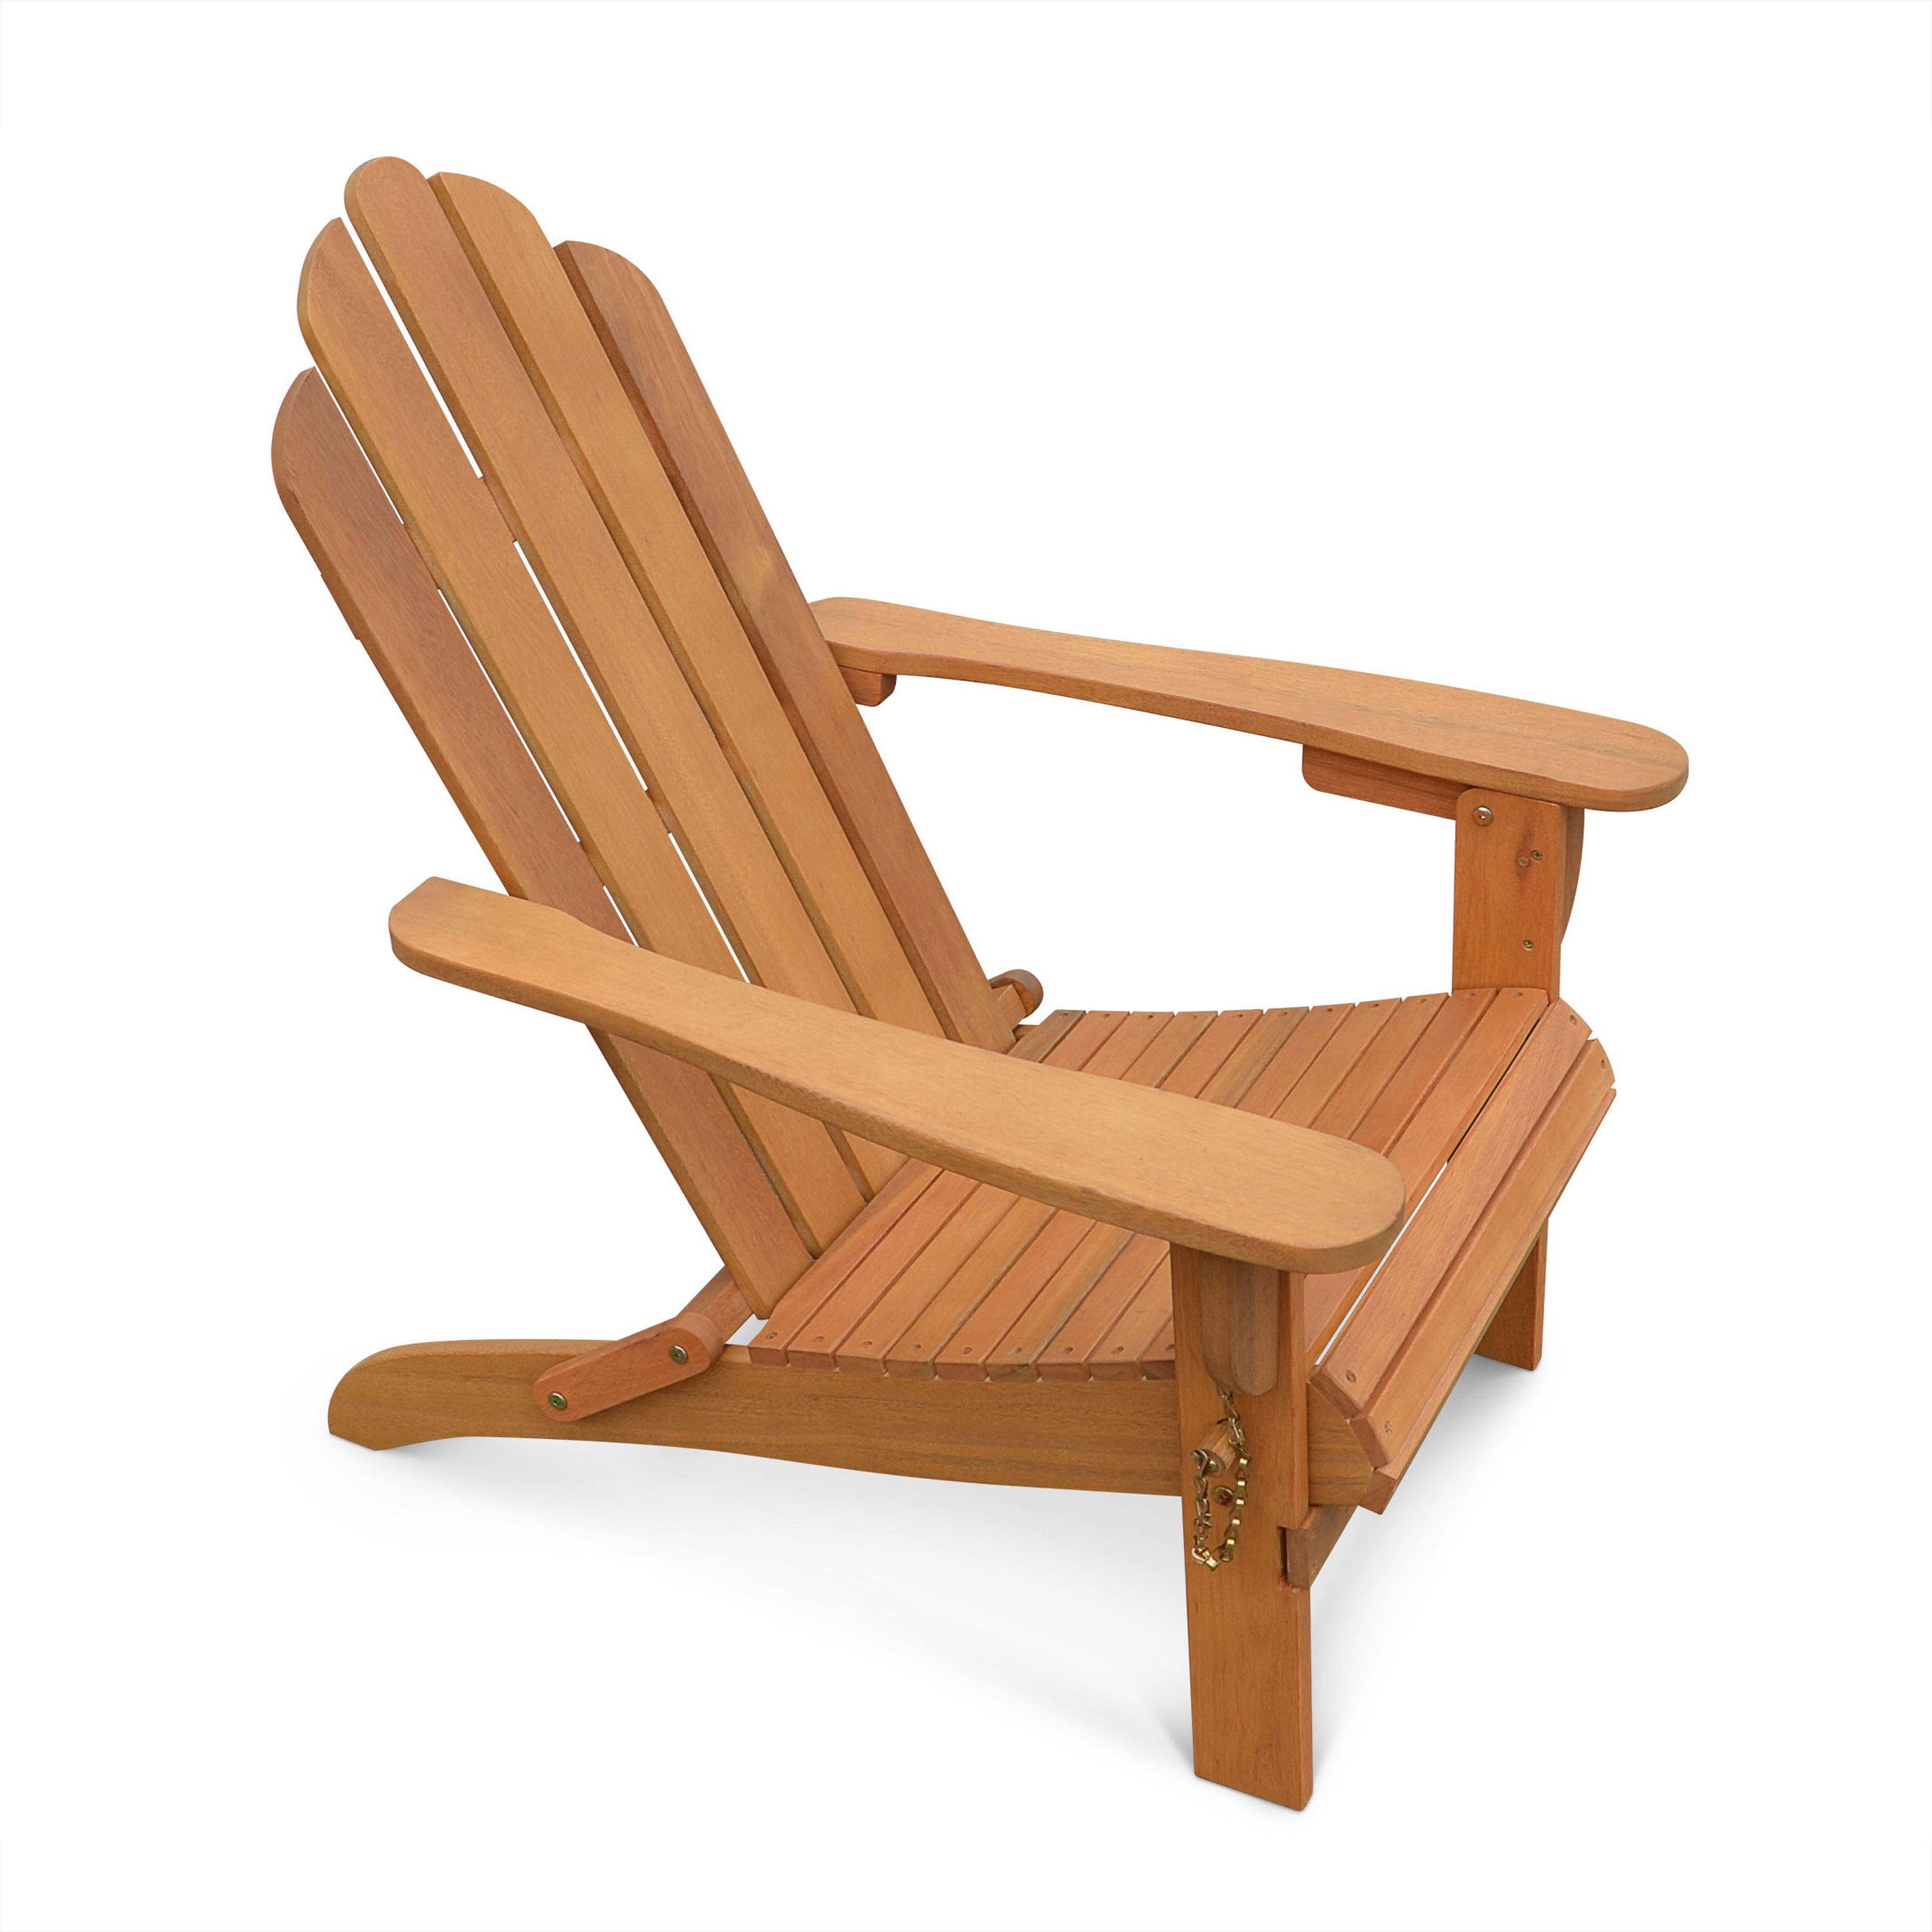 Foldable wooden eucalyptus retro garden armchair - Adirondack Salamanca - Natural wood colour,sweeek,Photo1